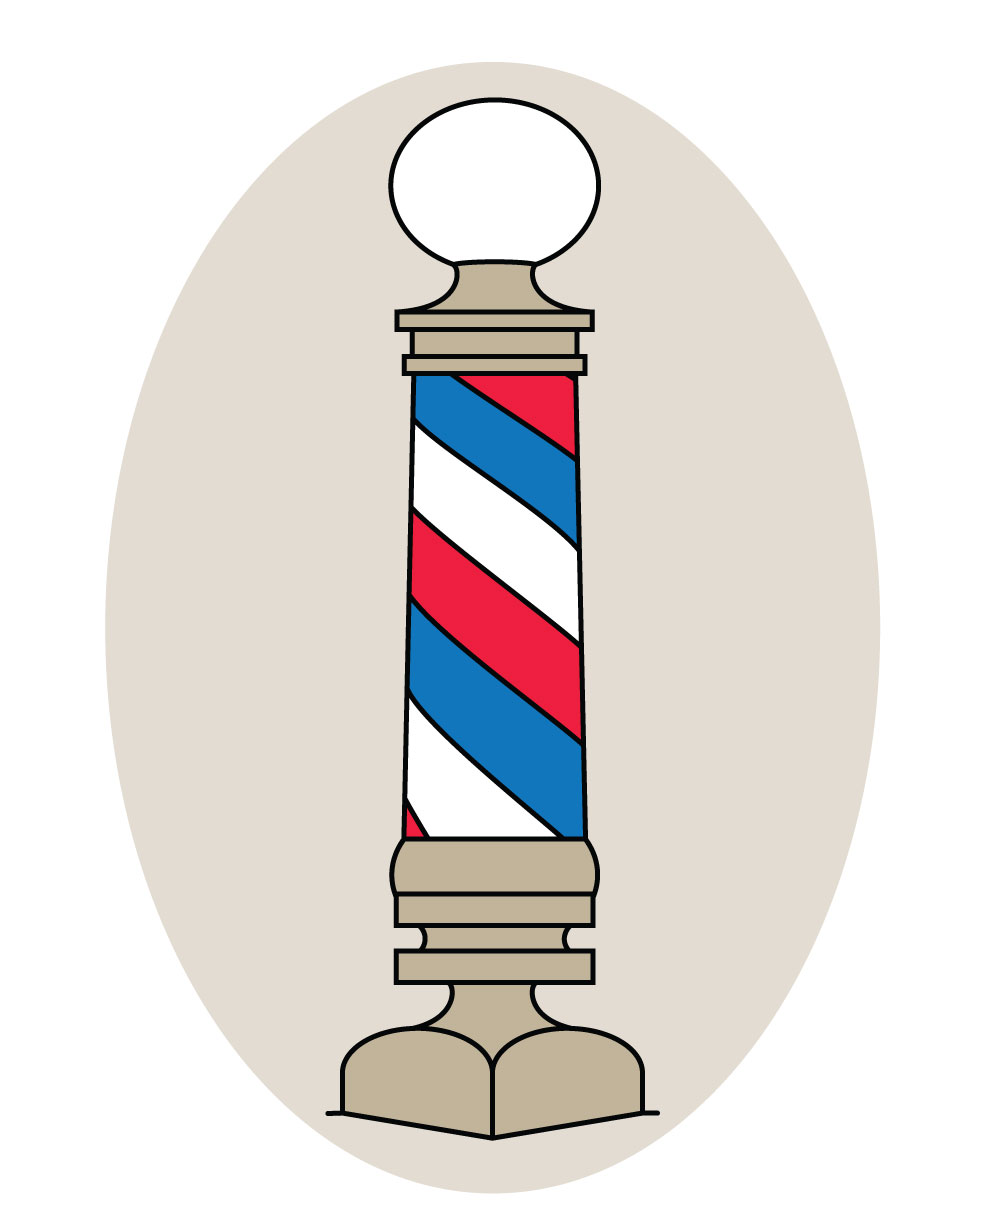 Helix (barberpole) stripes, part 2 of a jogless stripe series